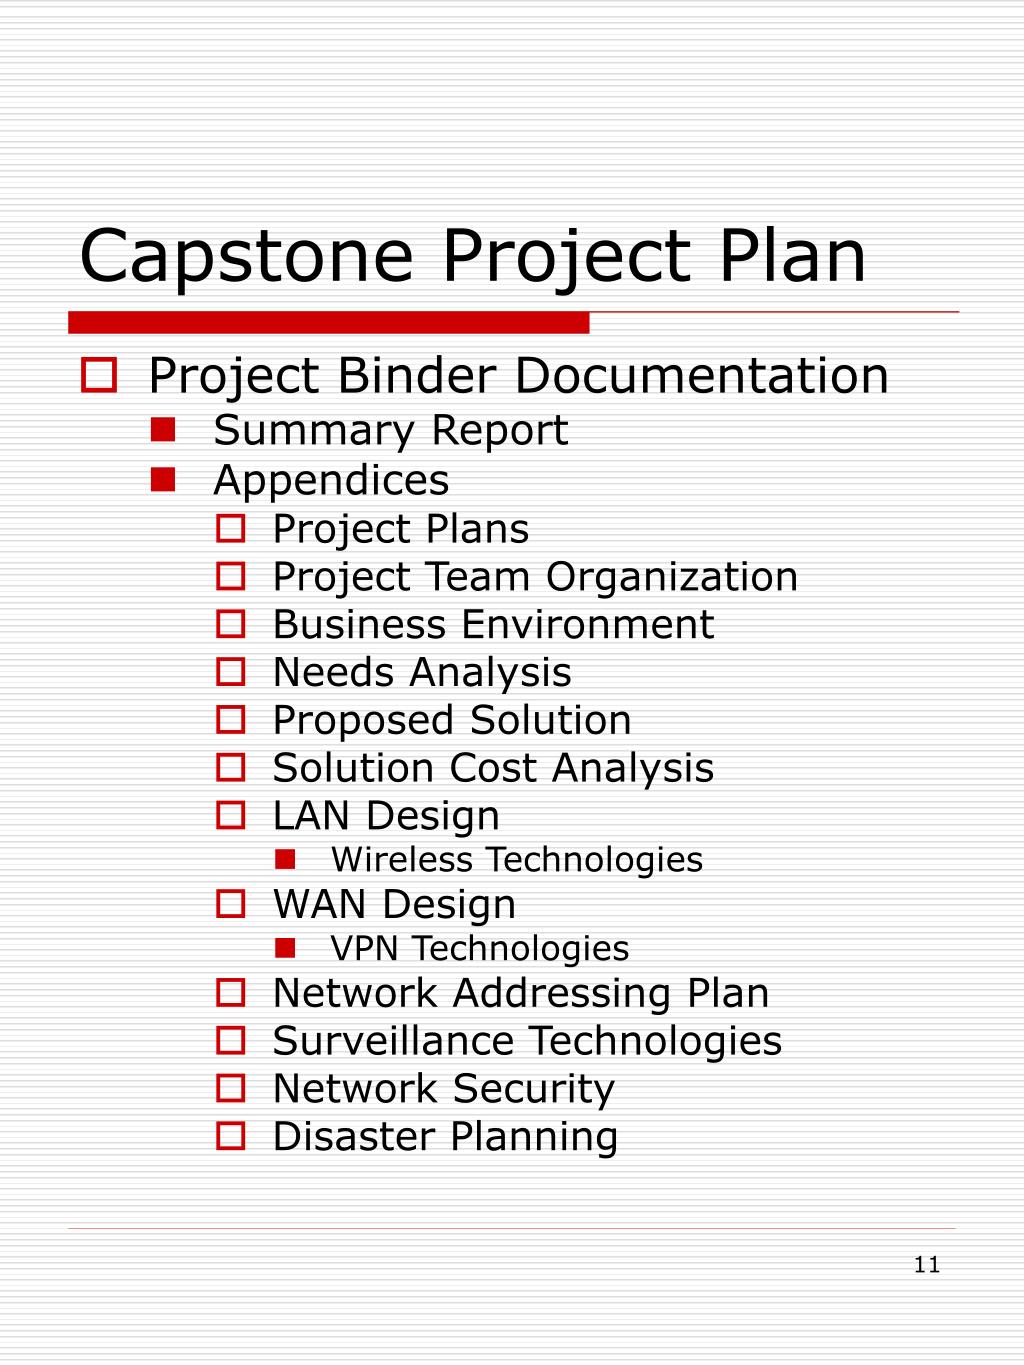 capstone project implementation plan